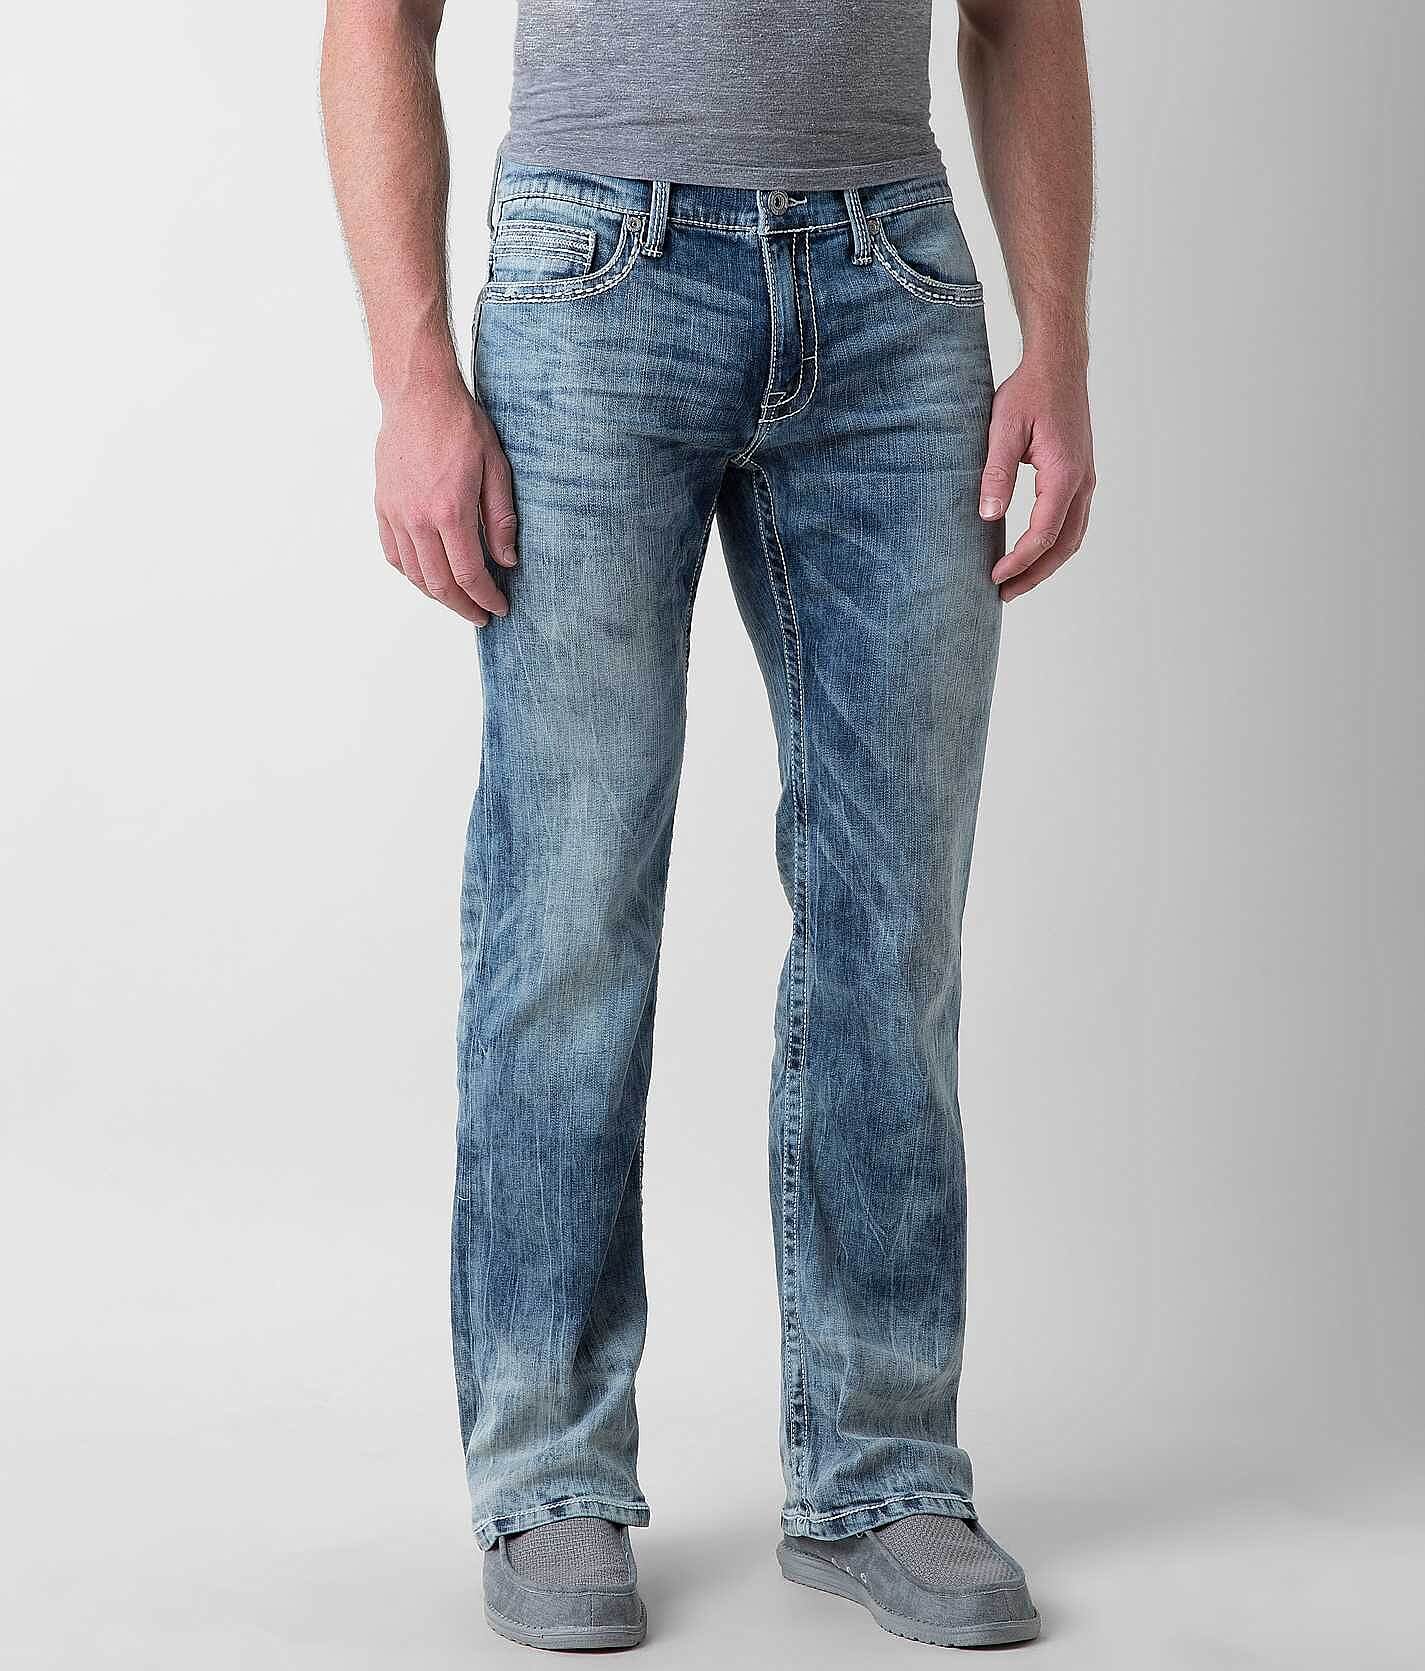 buckle carter jeans